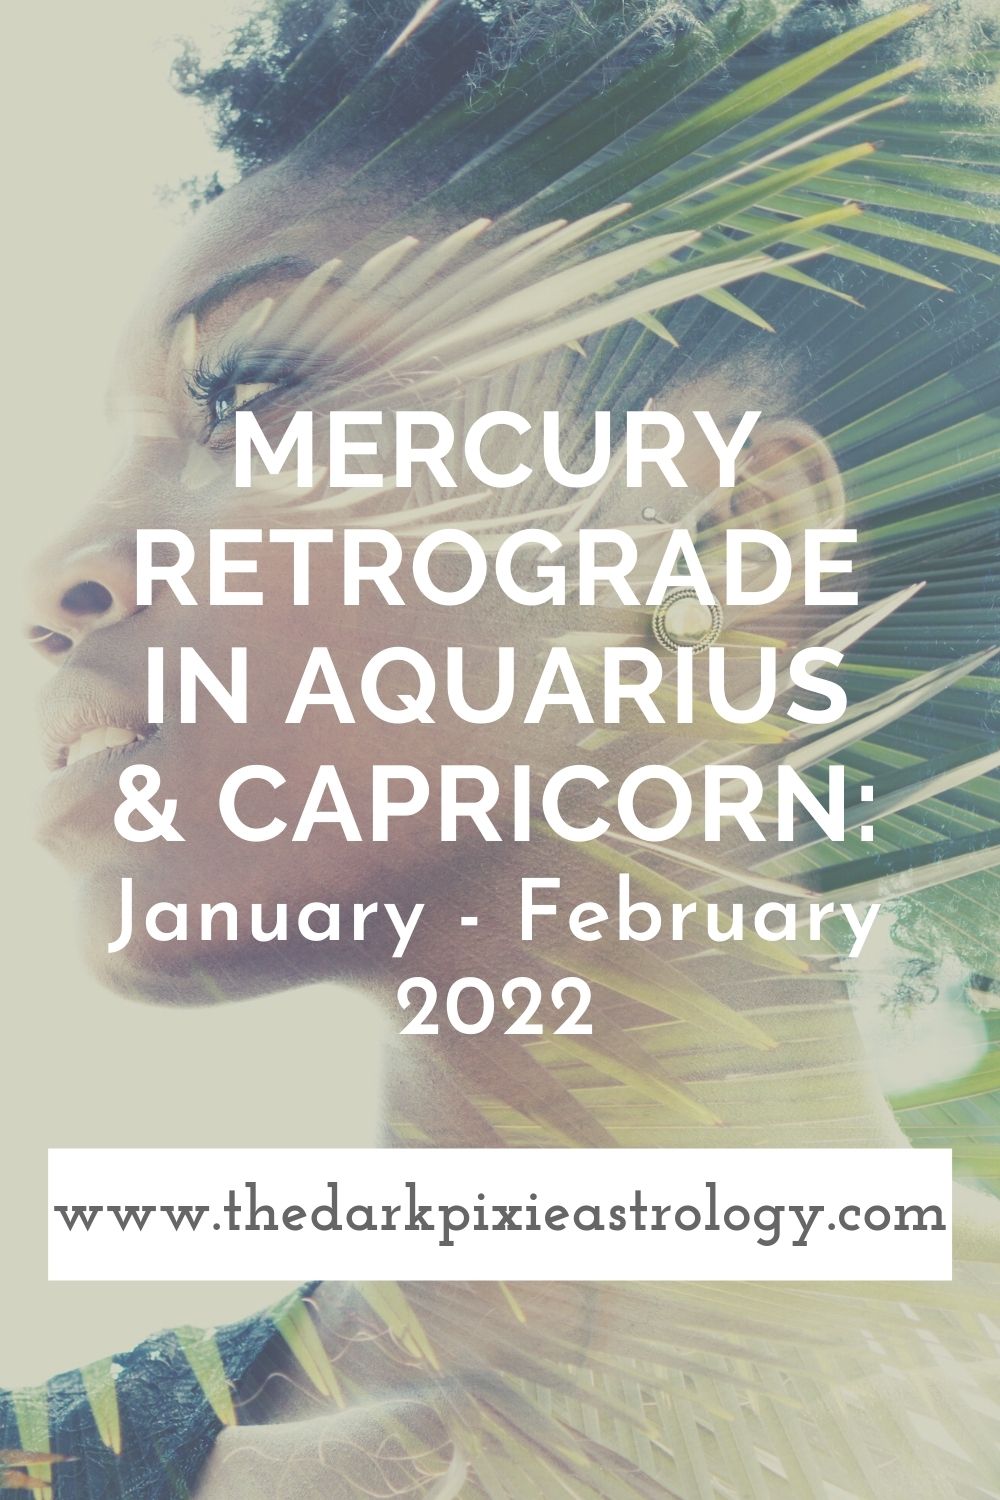 Mercury Retrograde in Aquarius & Capricorn January February 2022